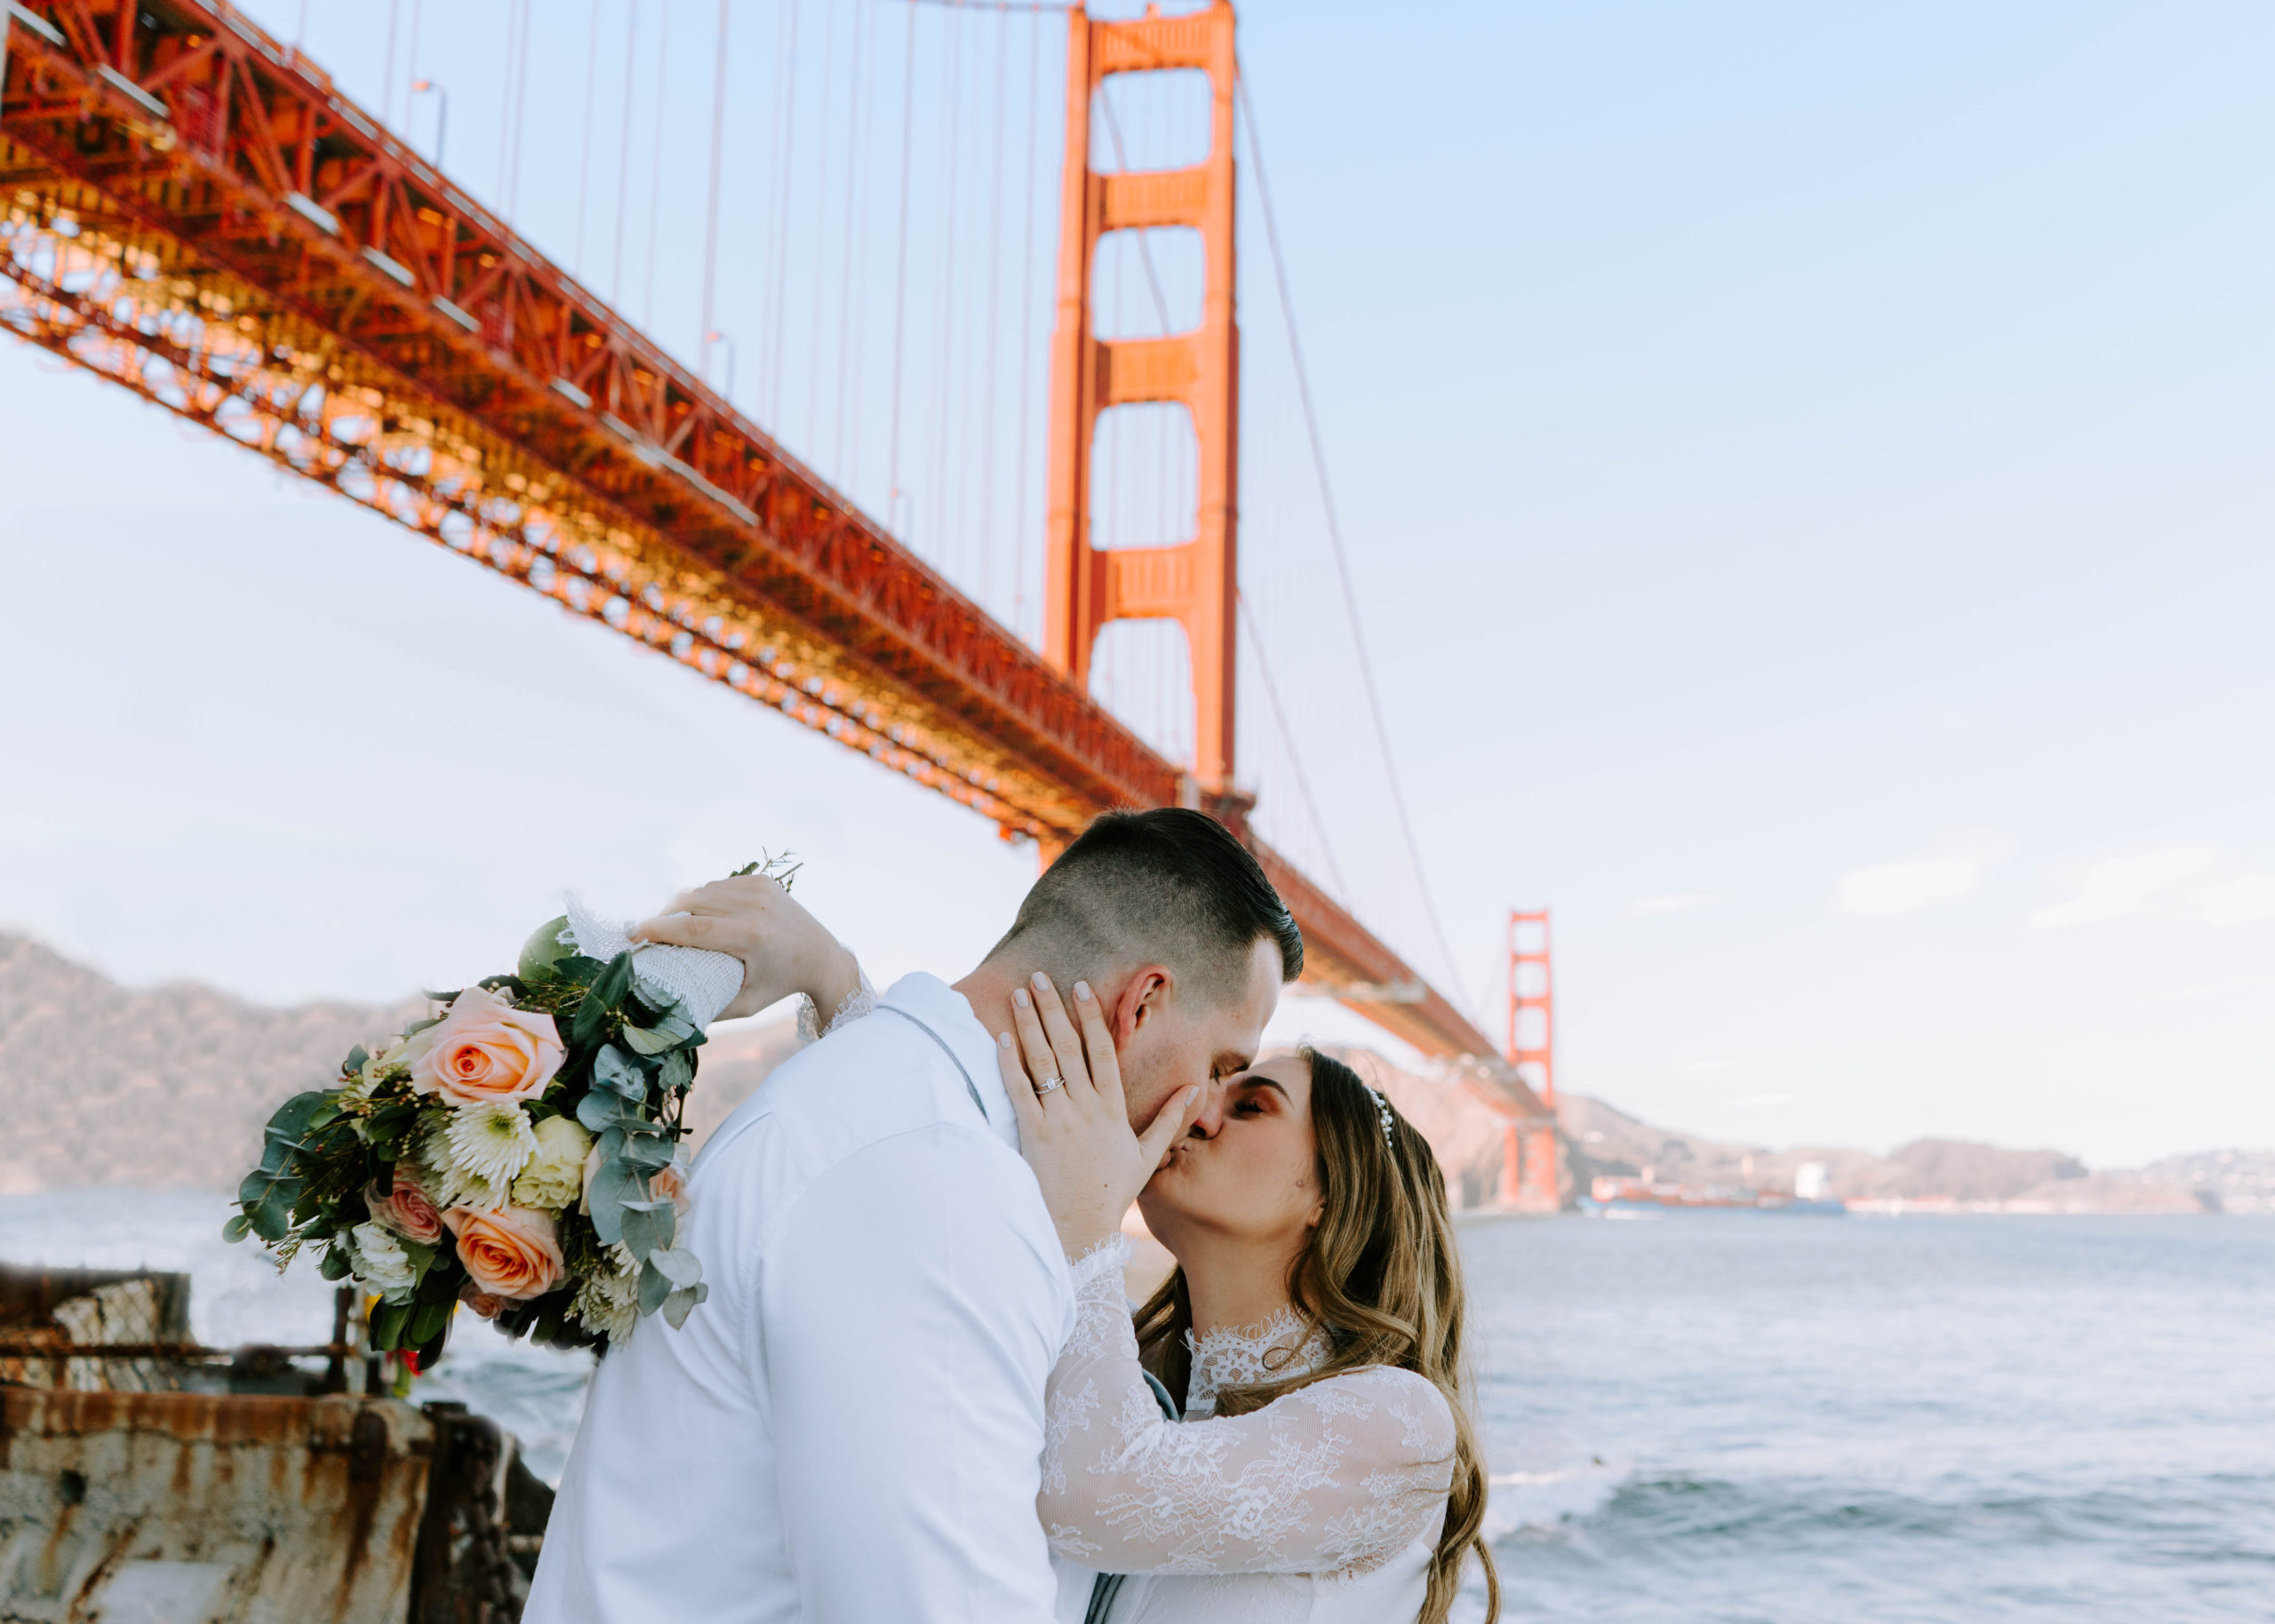 Newlywed couple kissing at the Golden Gate Bridge captured by San Francisco photogapher Torez Marguerite.